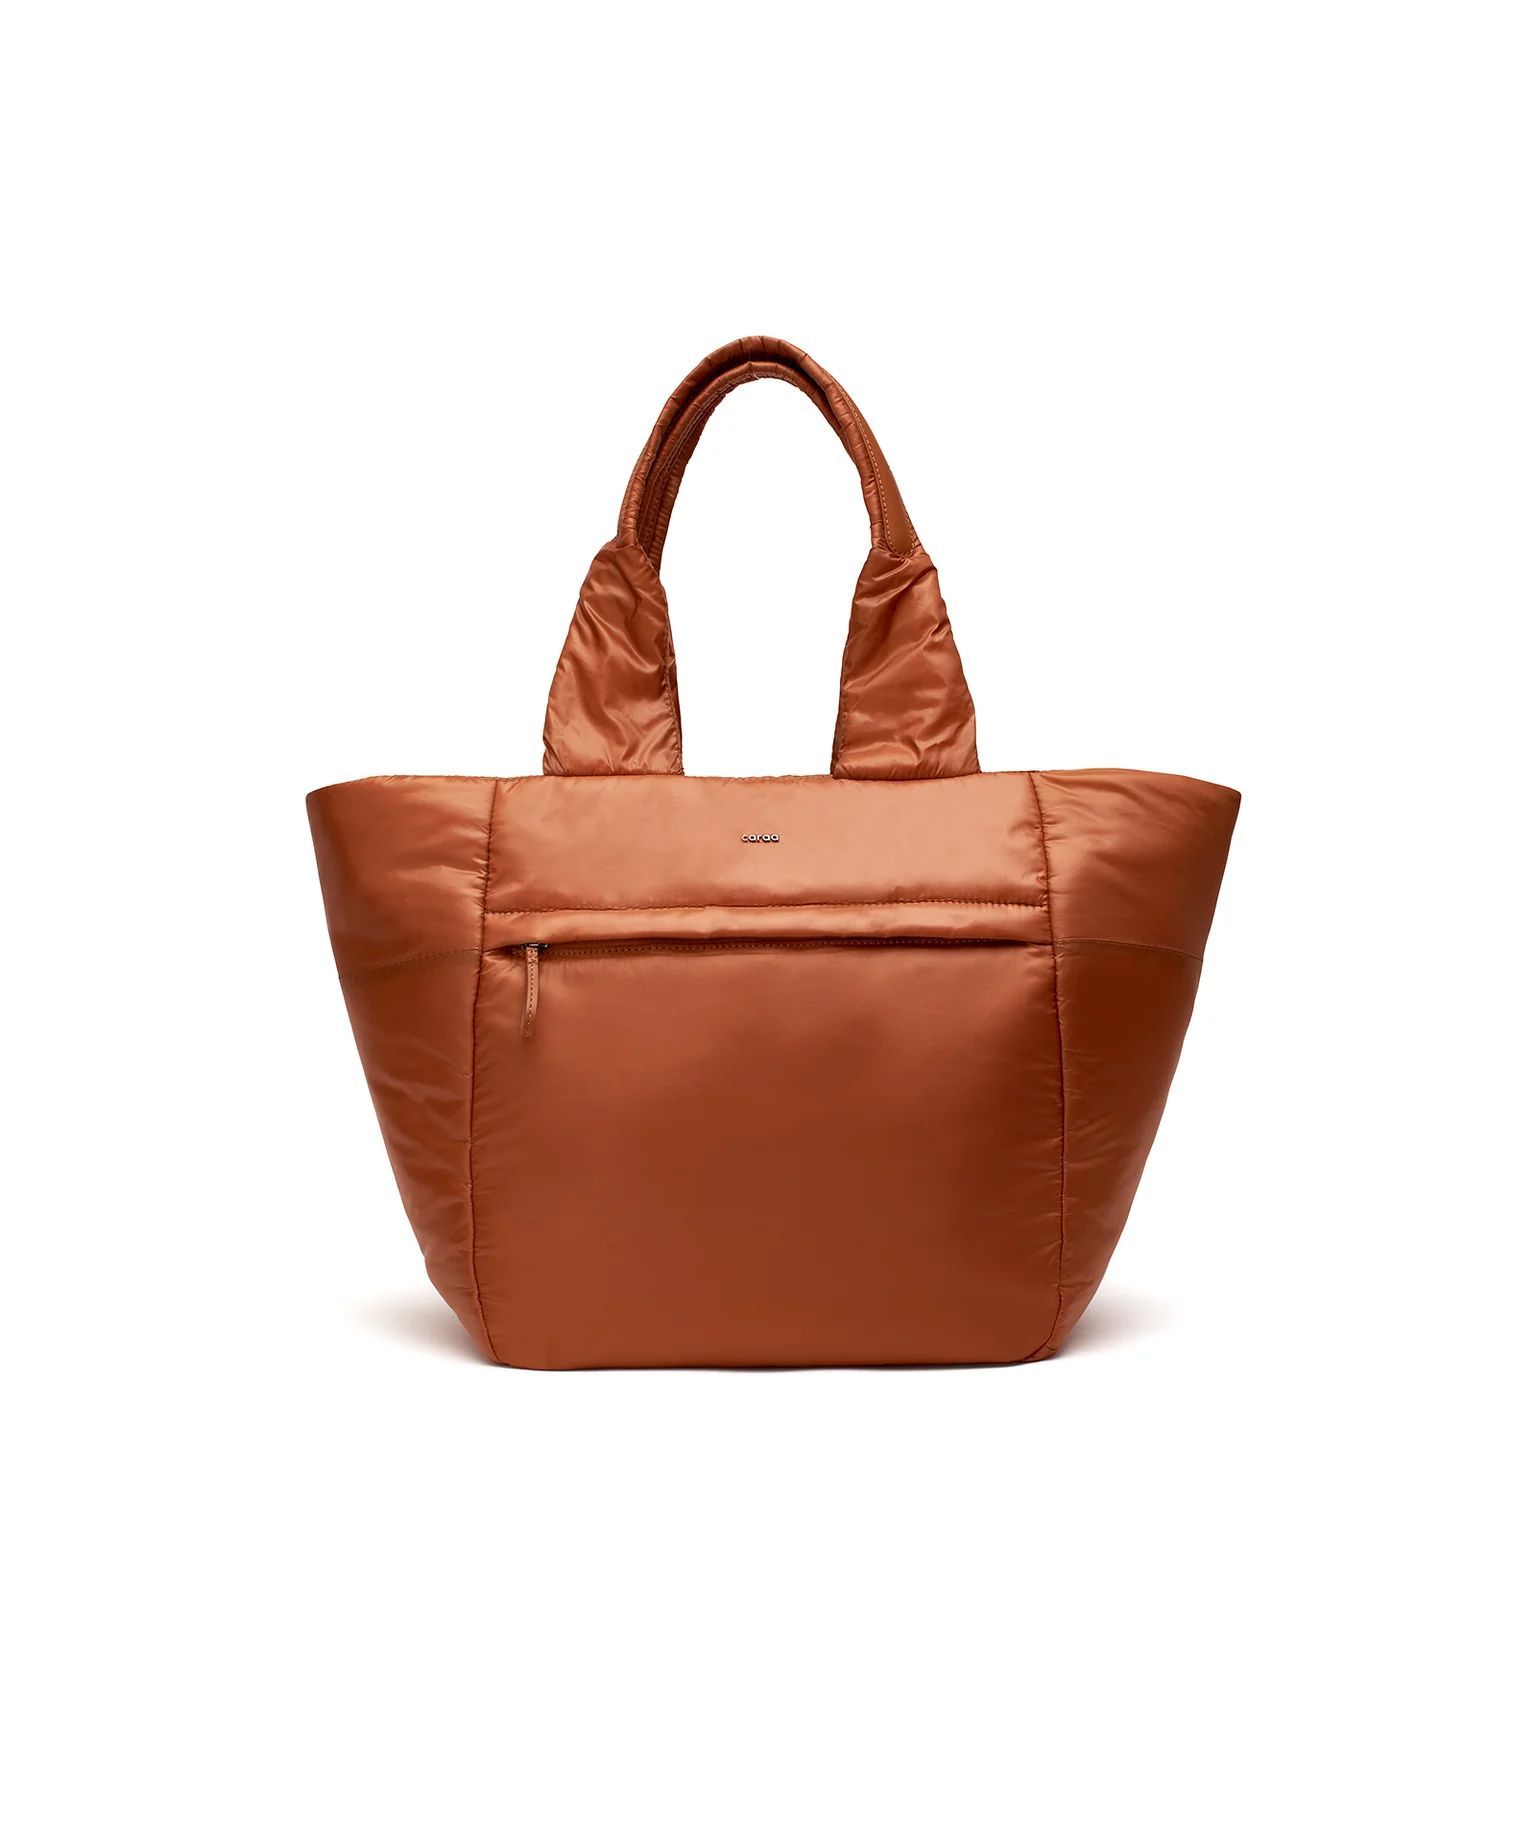 Pradas nylon bags are disgraceful : r/handbags